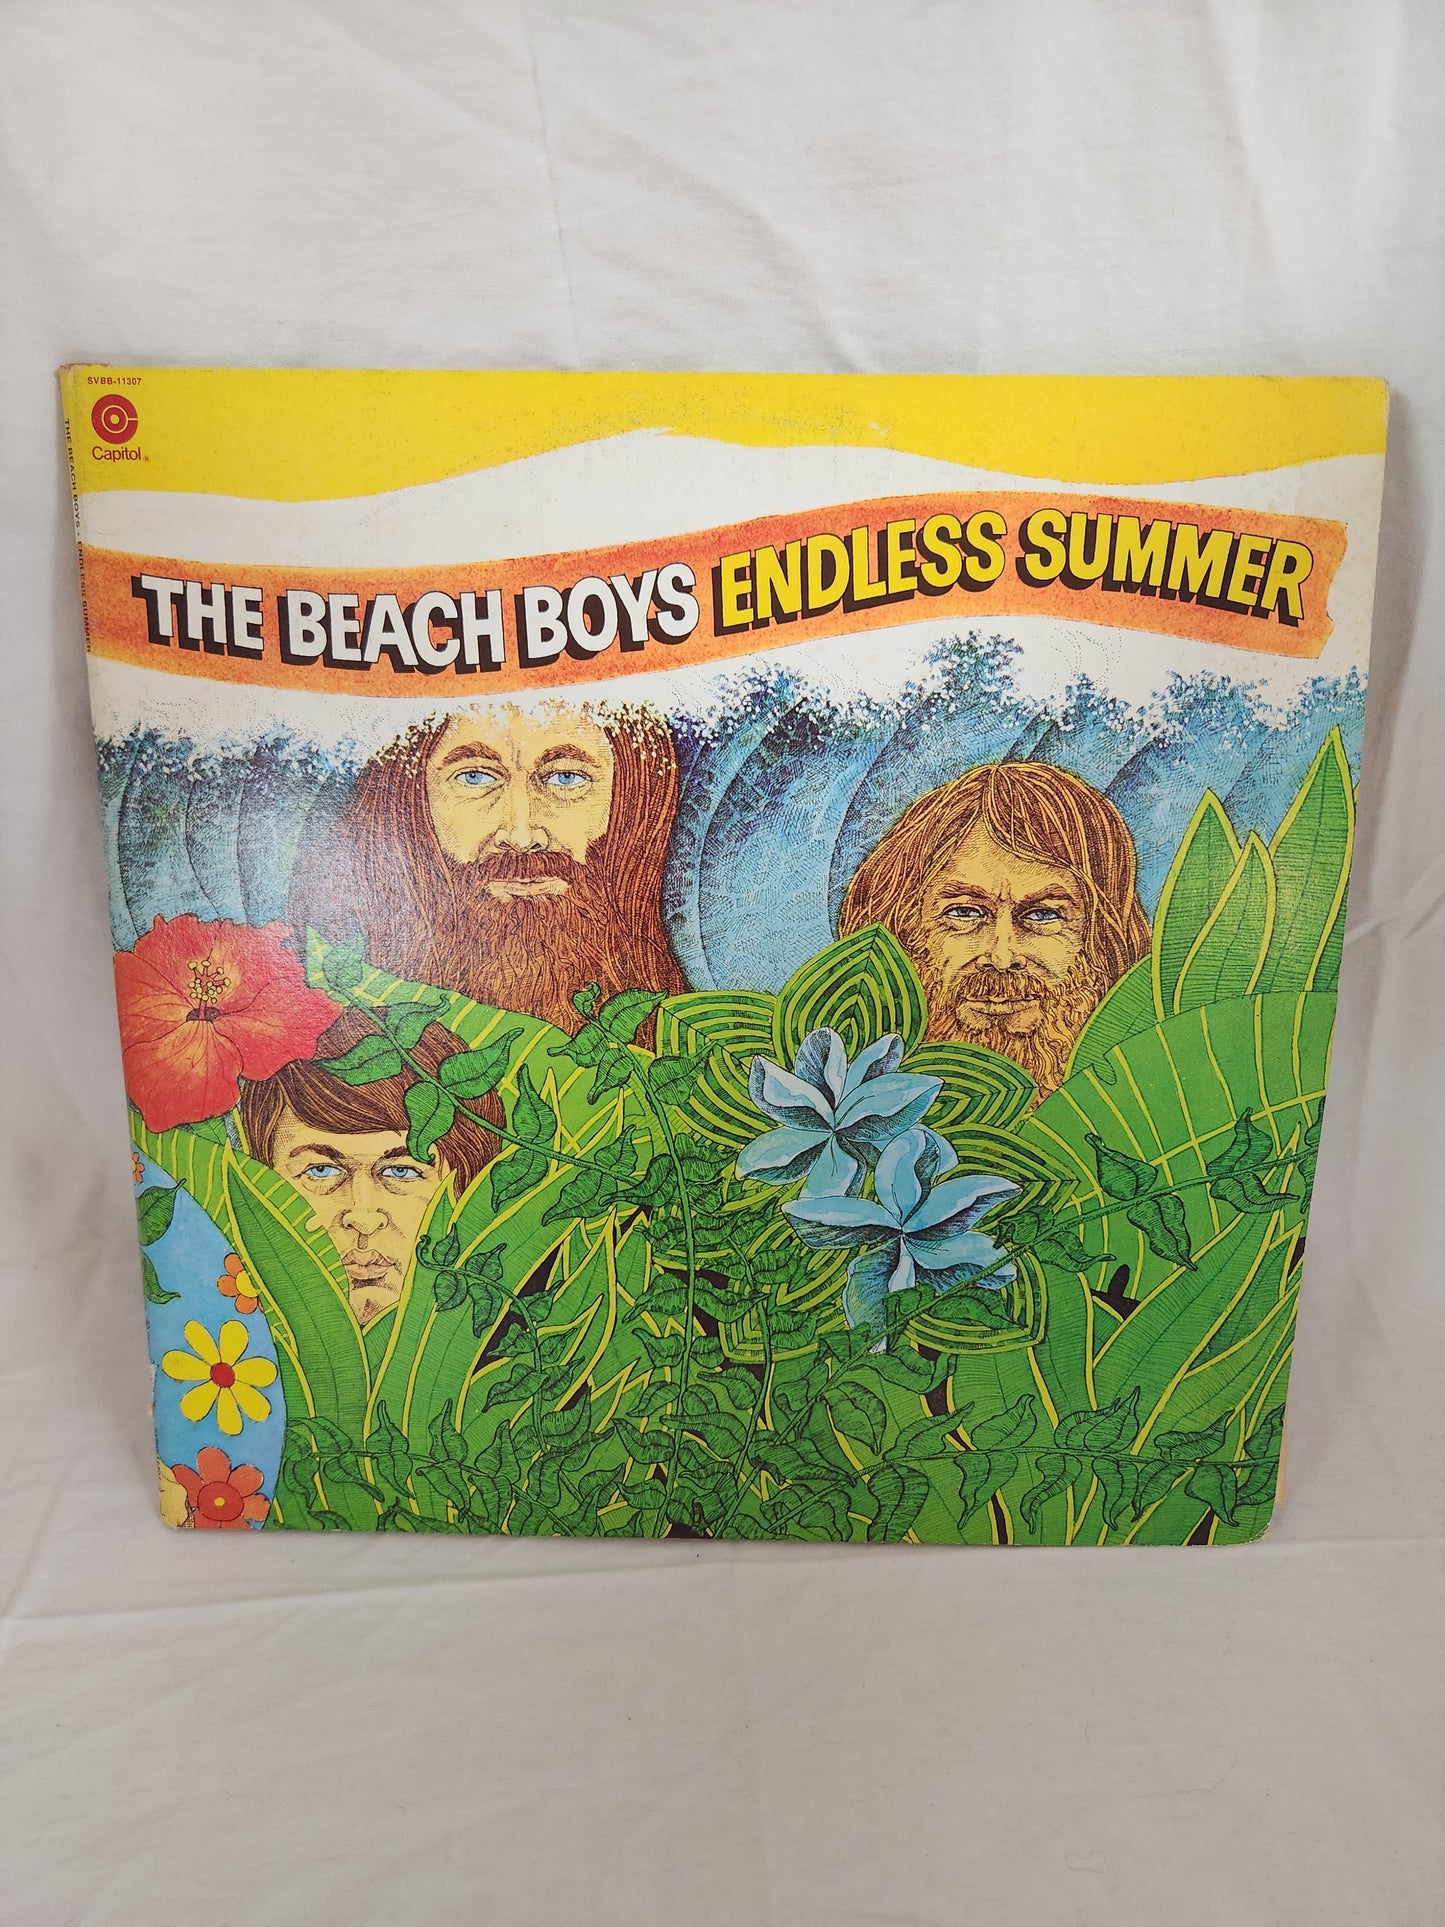 The Beach Boys: Endless Summer Vinyl Album